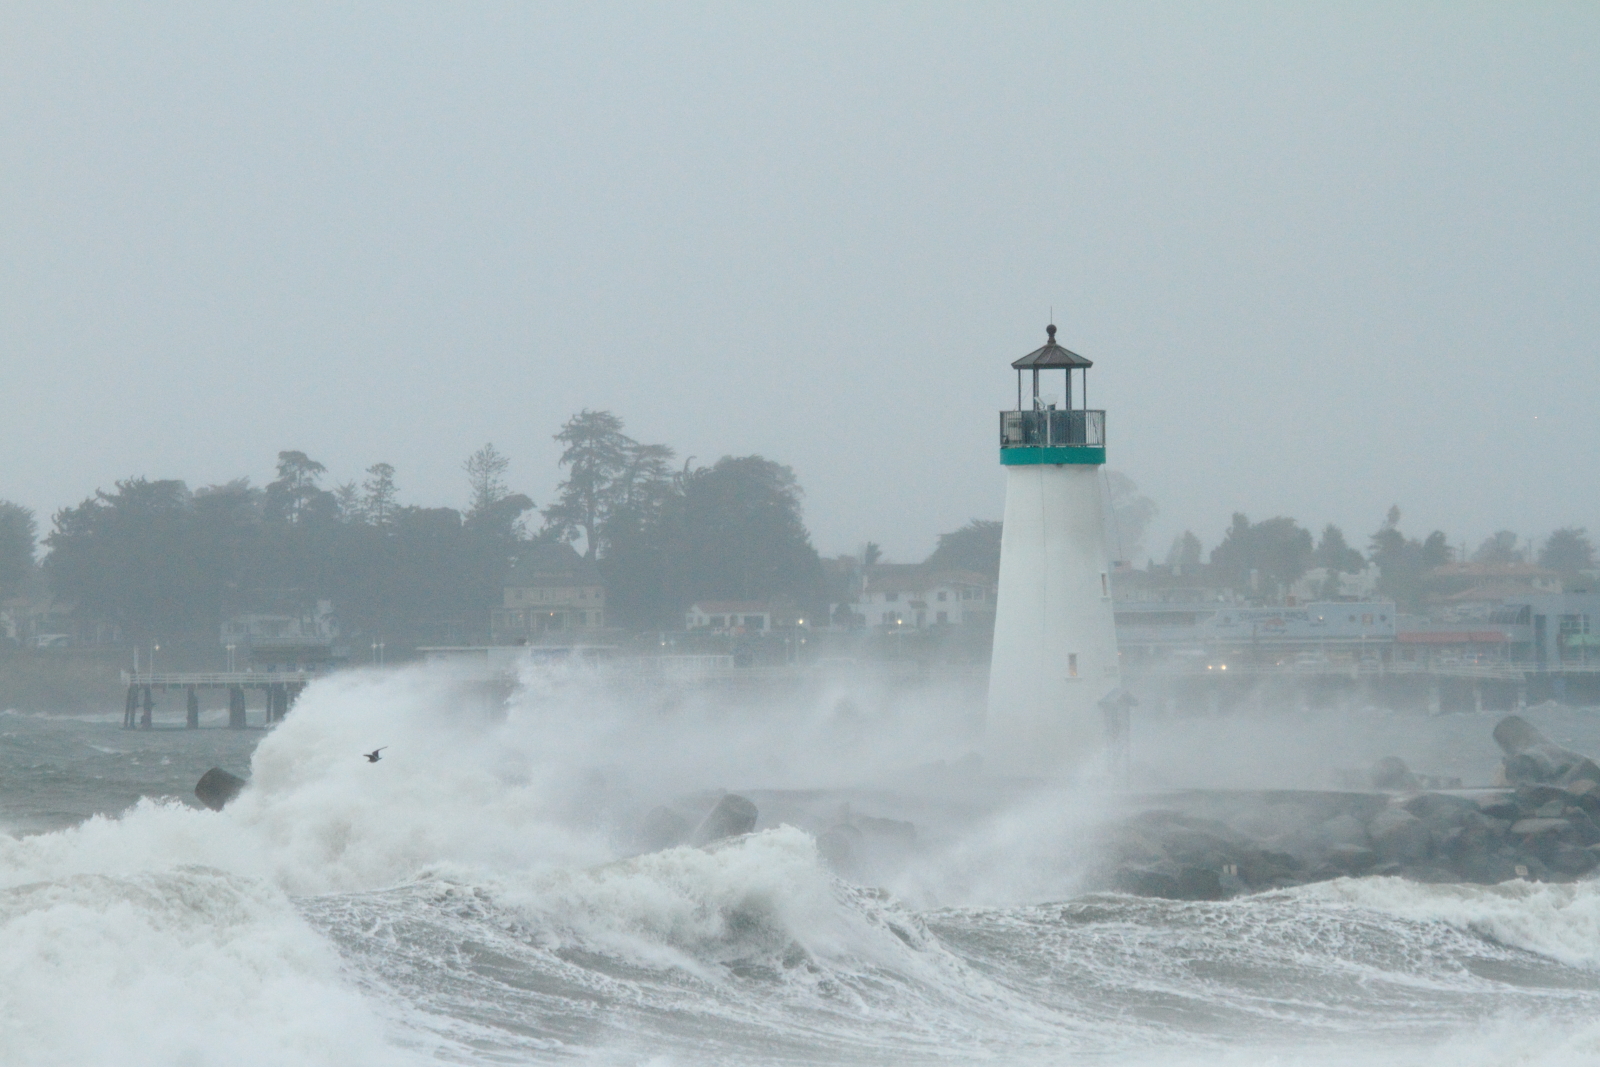 Photos from Winter storm in Santa Cruz, December 2014 David DeMartini